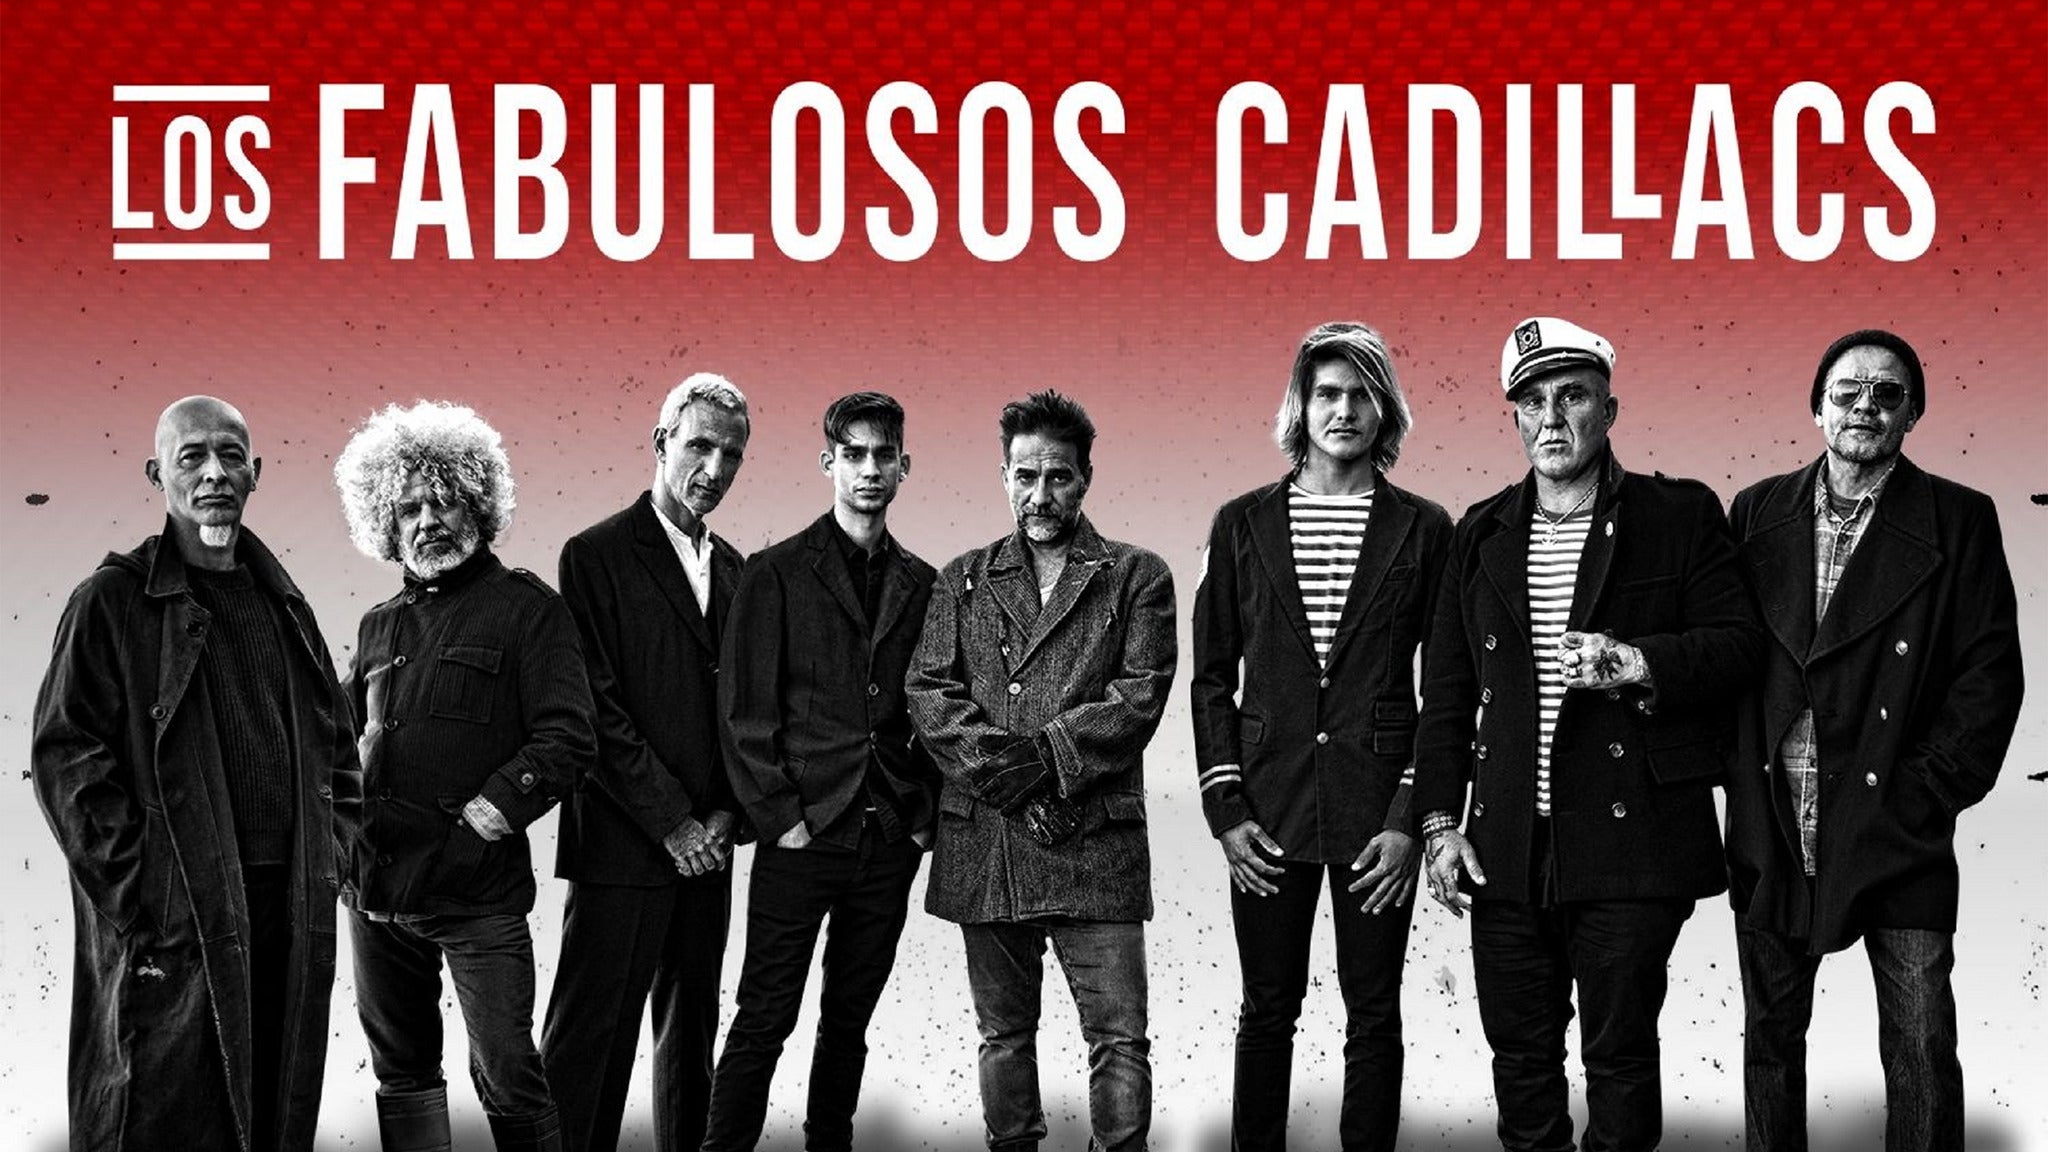 Los Fabulosos Cadillacs in México promo photo for Gran Venta HSBC presale offer code